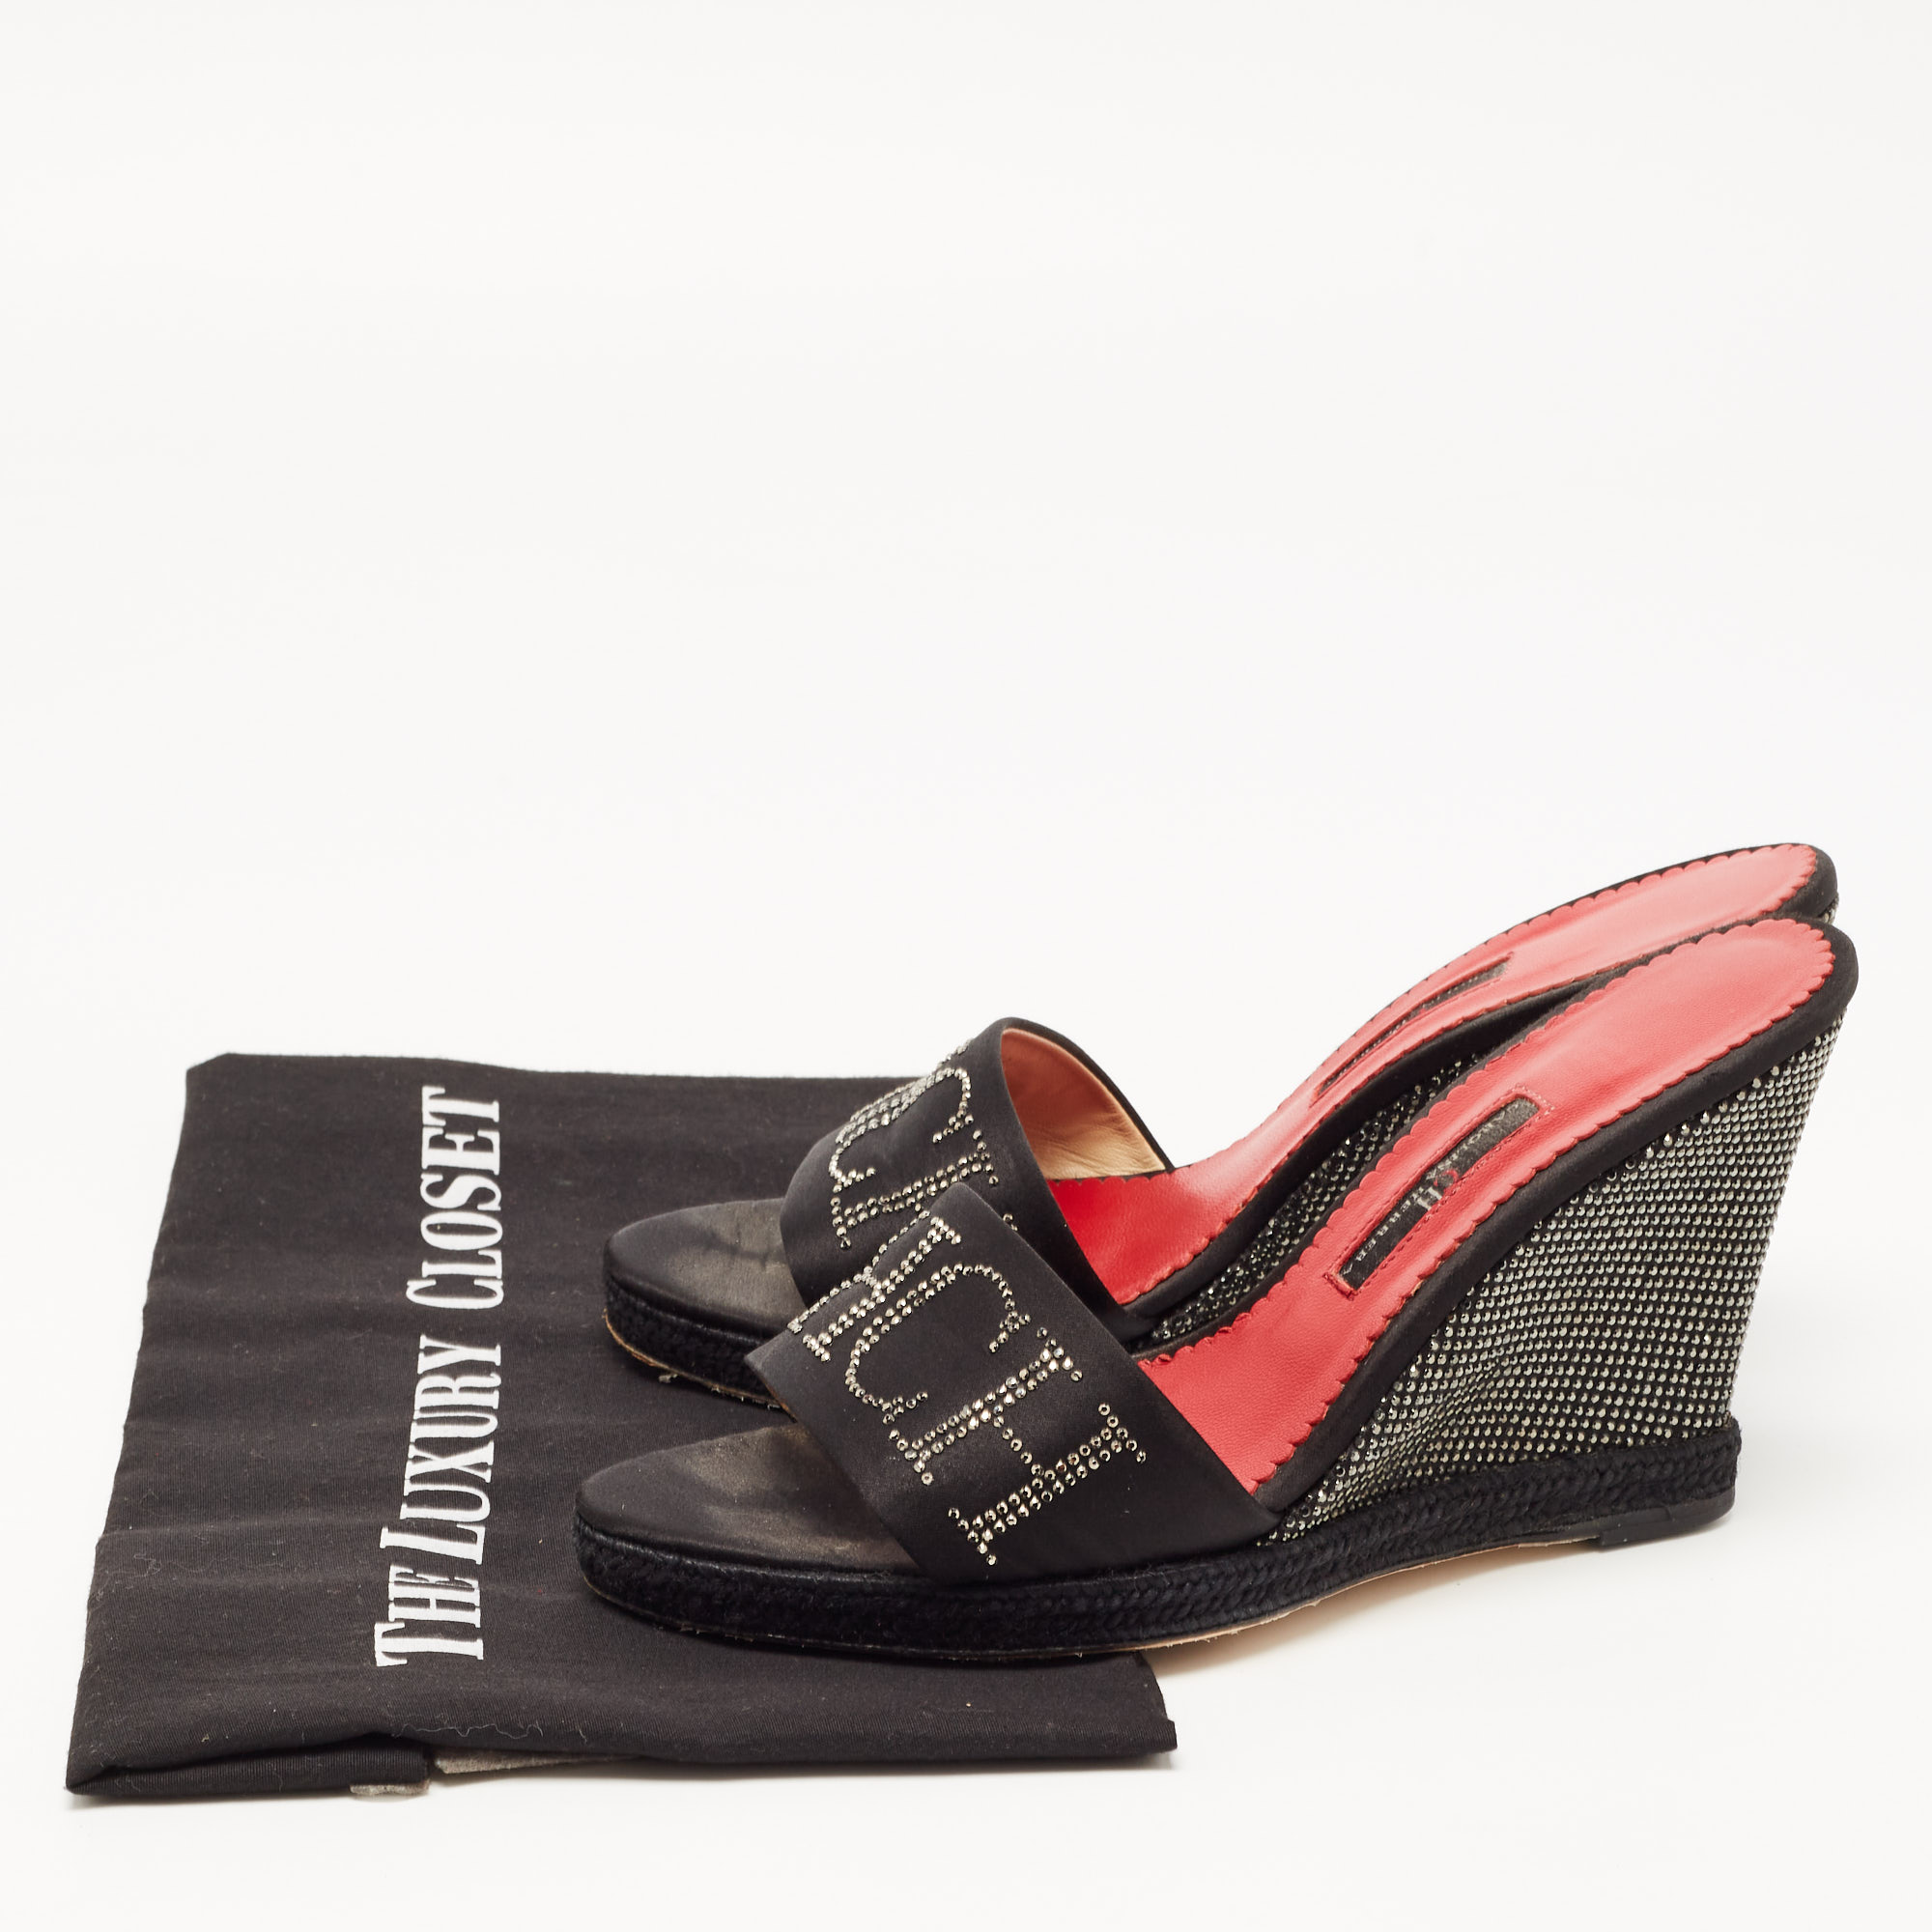 CH Carolina Herrera Black Satin Studded Wedge Sandals Size 38